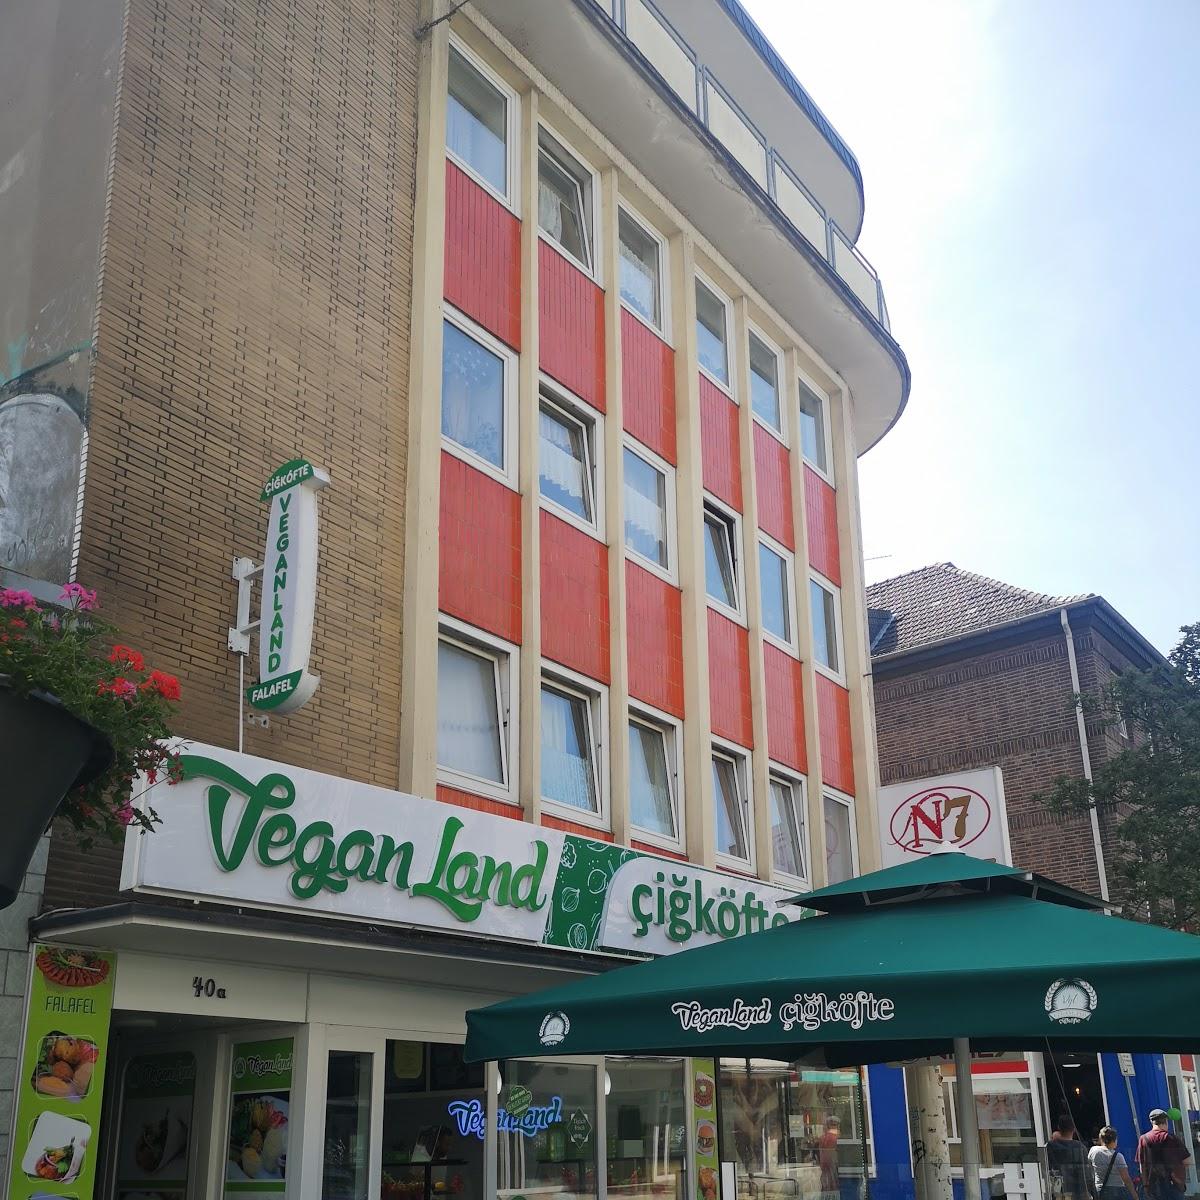 Restaurant "Veganland Cigköfte" in Moers